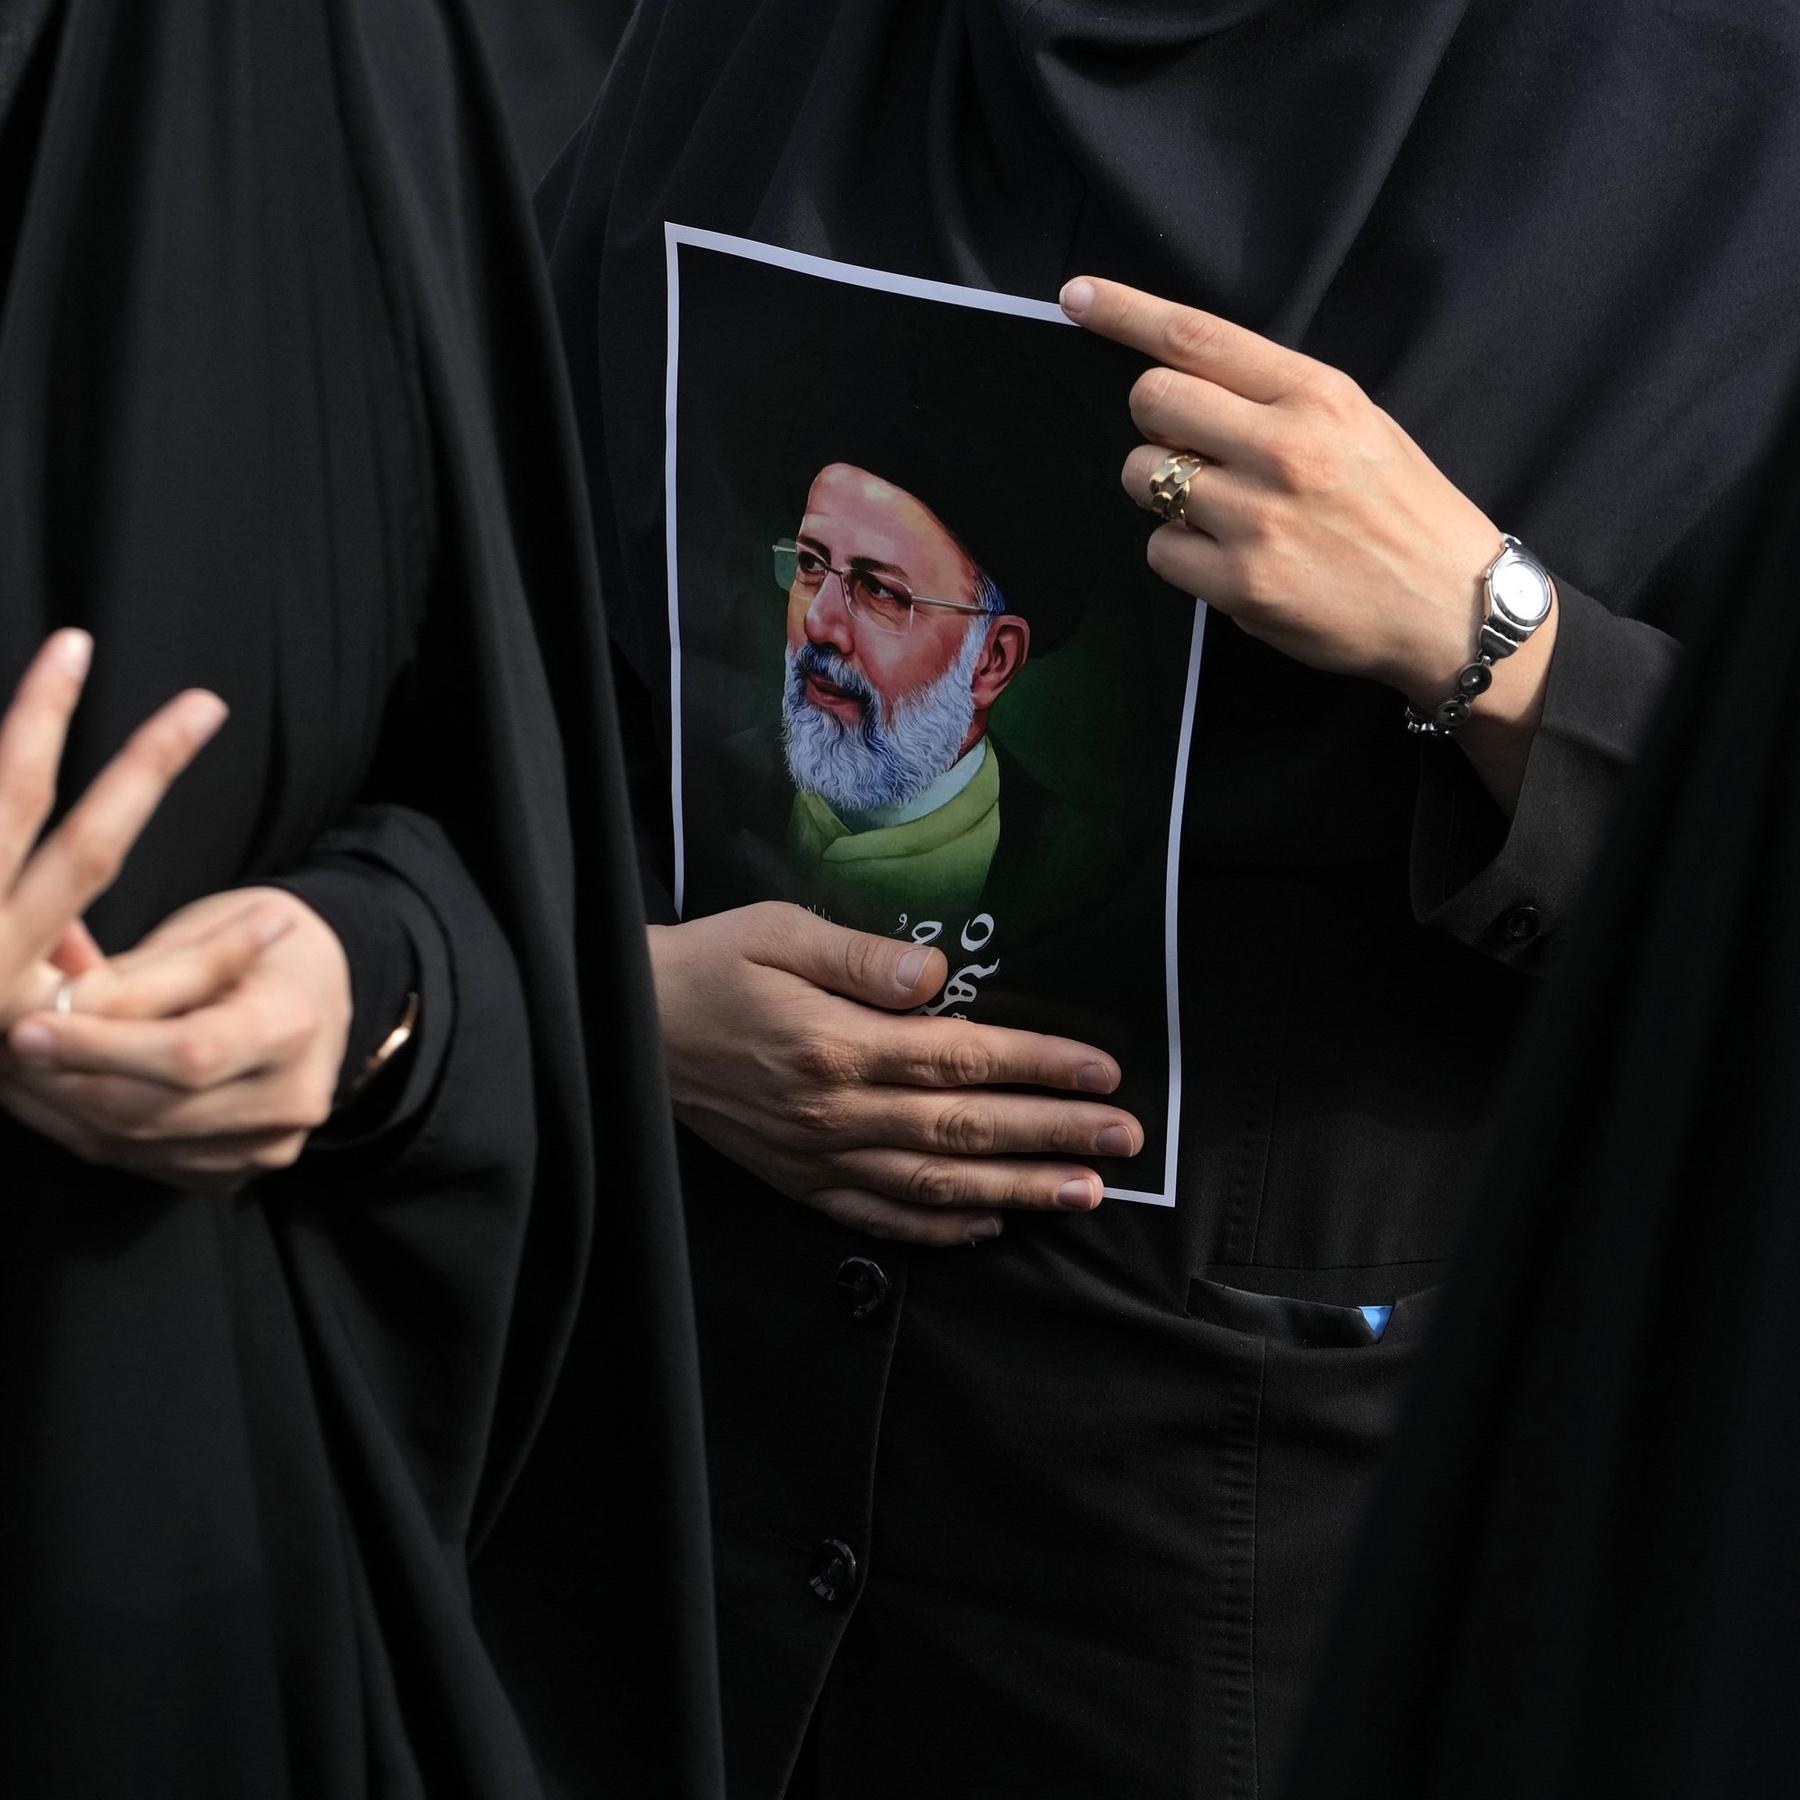 Tod des iranischen Präsidenten Raisi